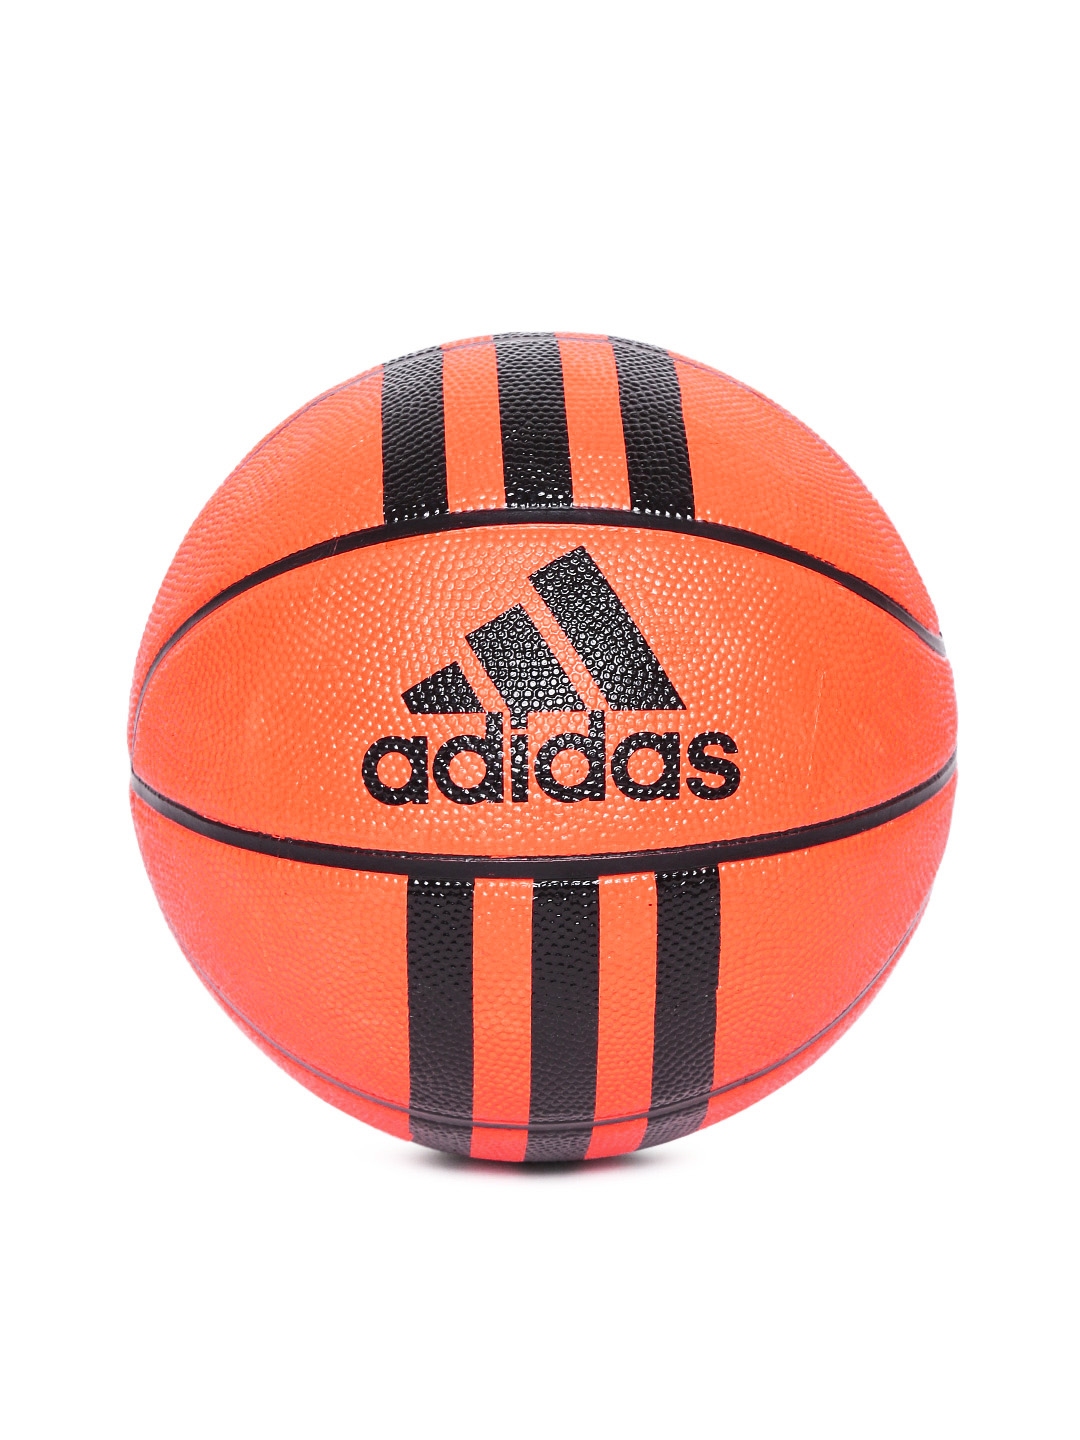 adidas 3 stripes mini basketball